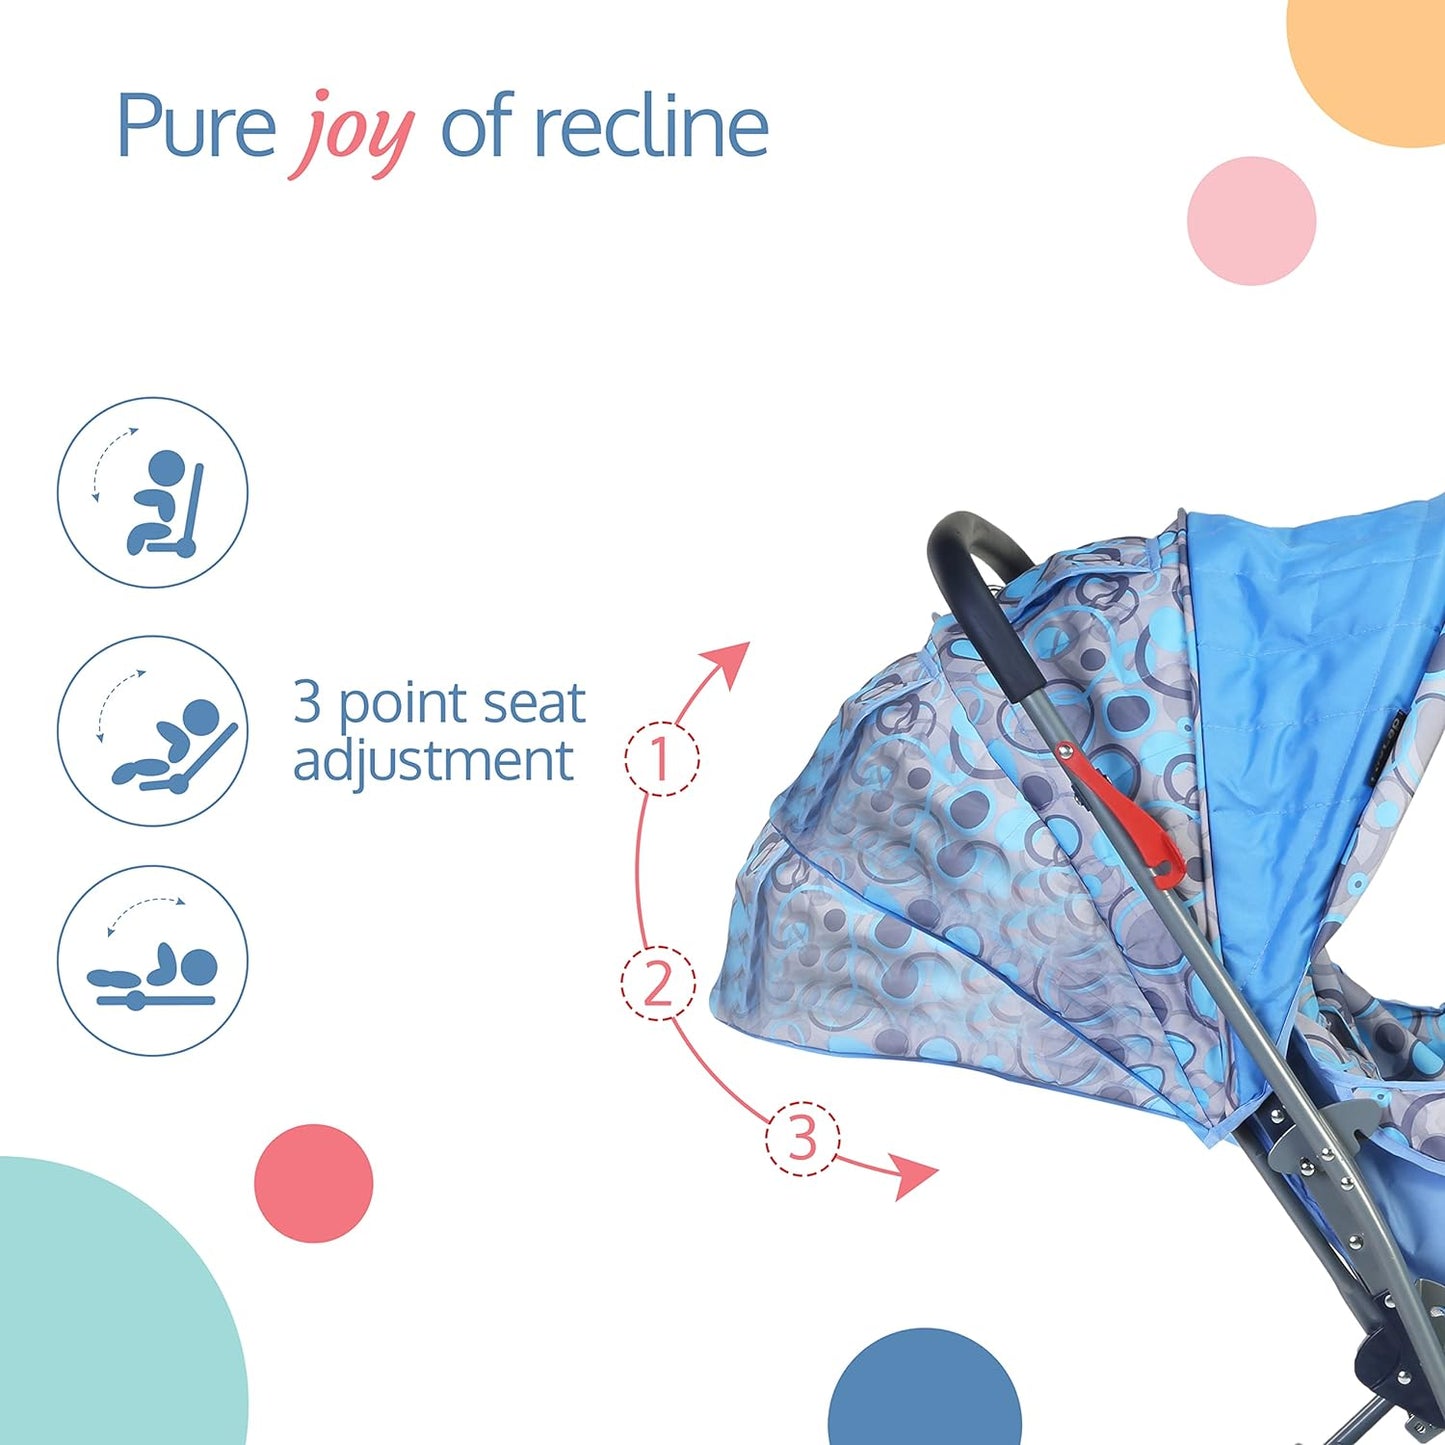 LuvLap Starshine Baby Stroller / Pram for 0 to 3 Years, New Born / Toddler / Kid, Lightweight, Adjustable backrest, 360° Swivel Wheel, Large storage basket, Reversible Handlebar (Sky Blue)- 18139